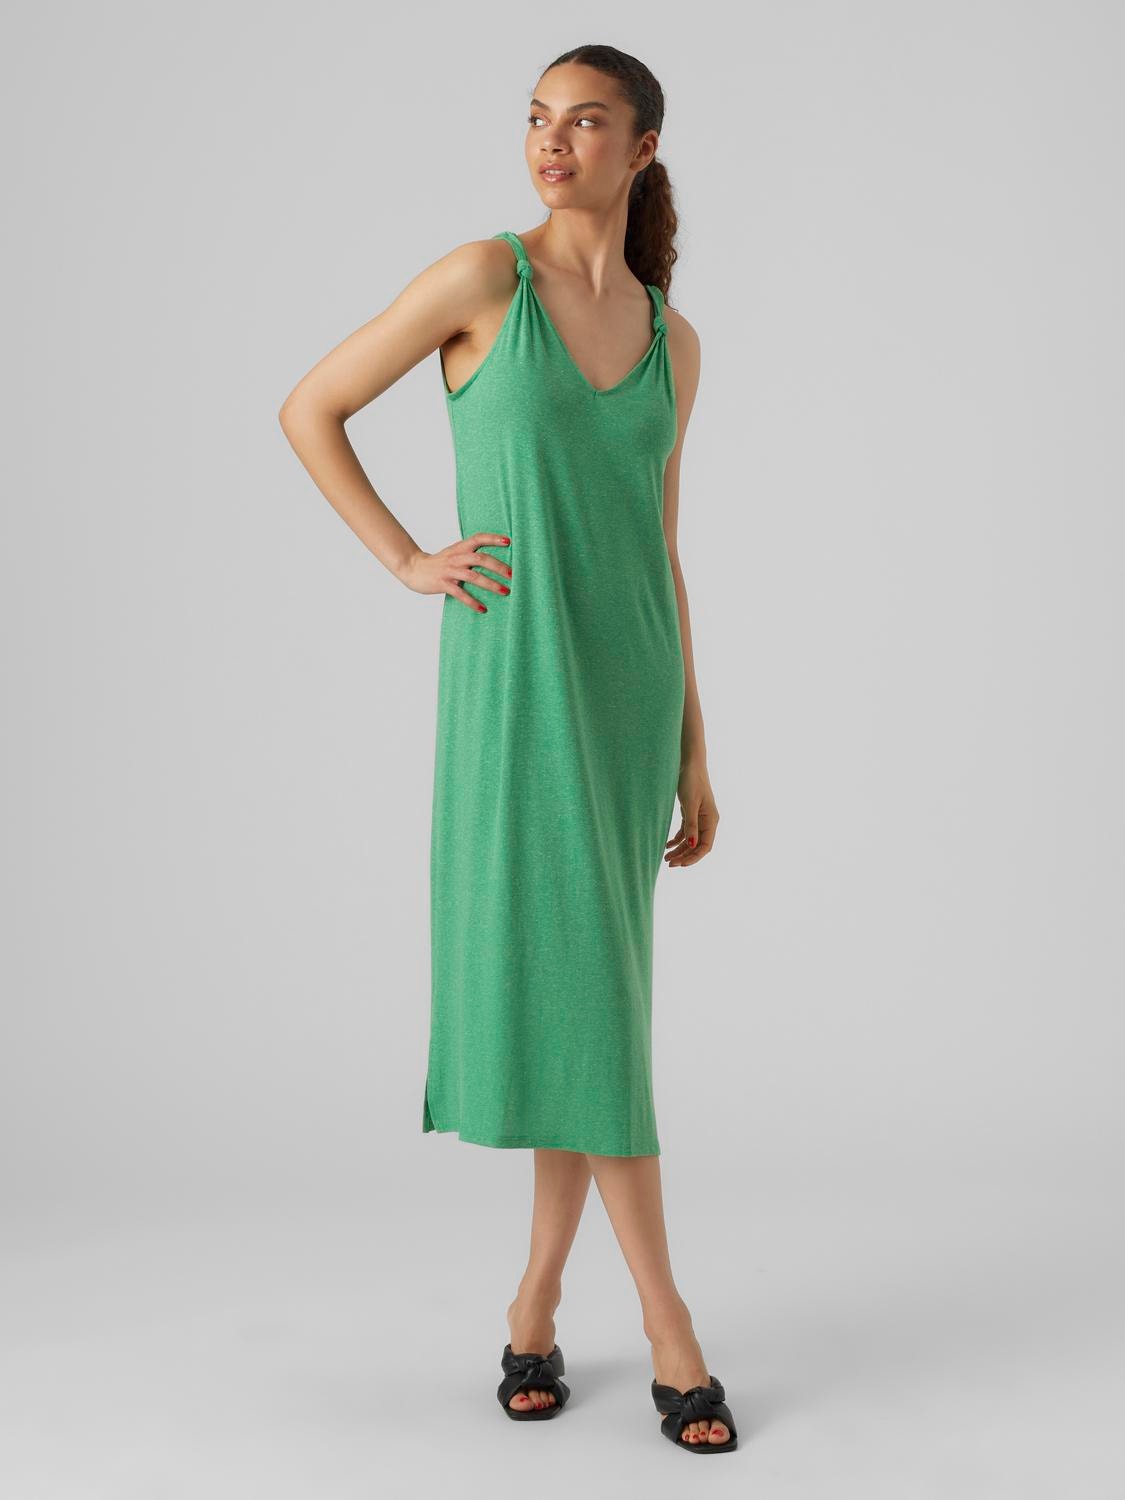 Bende beklimmen procent Lange jurk | Midden Groen | Vero Moda®